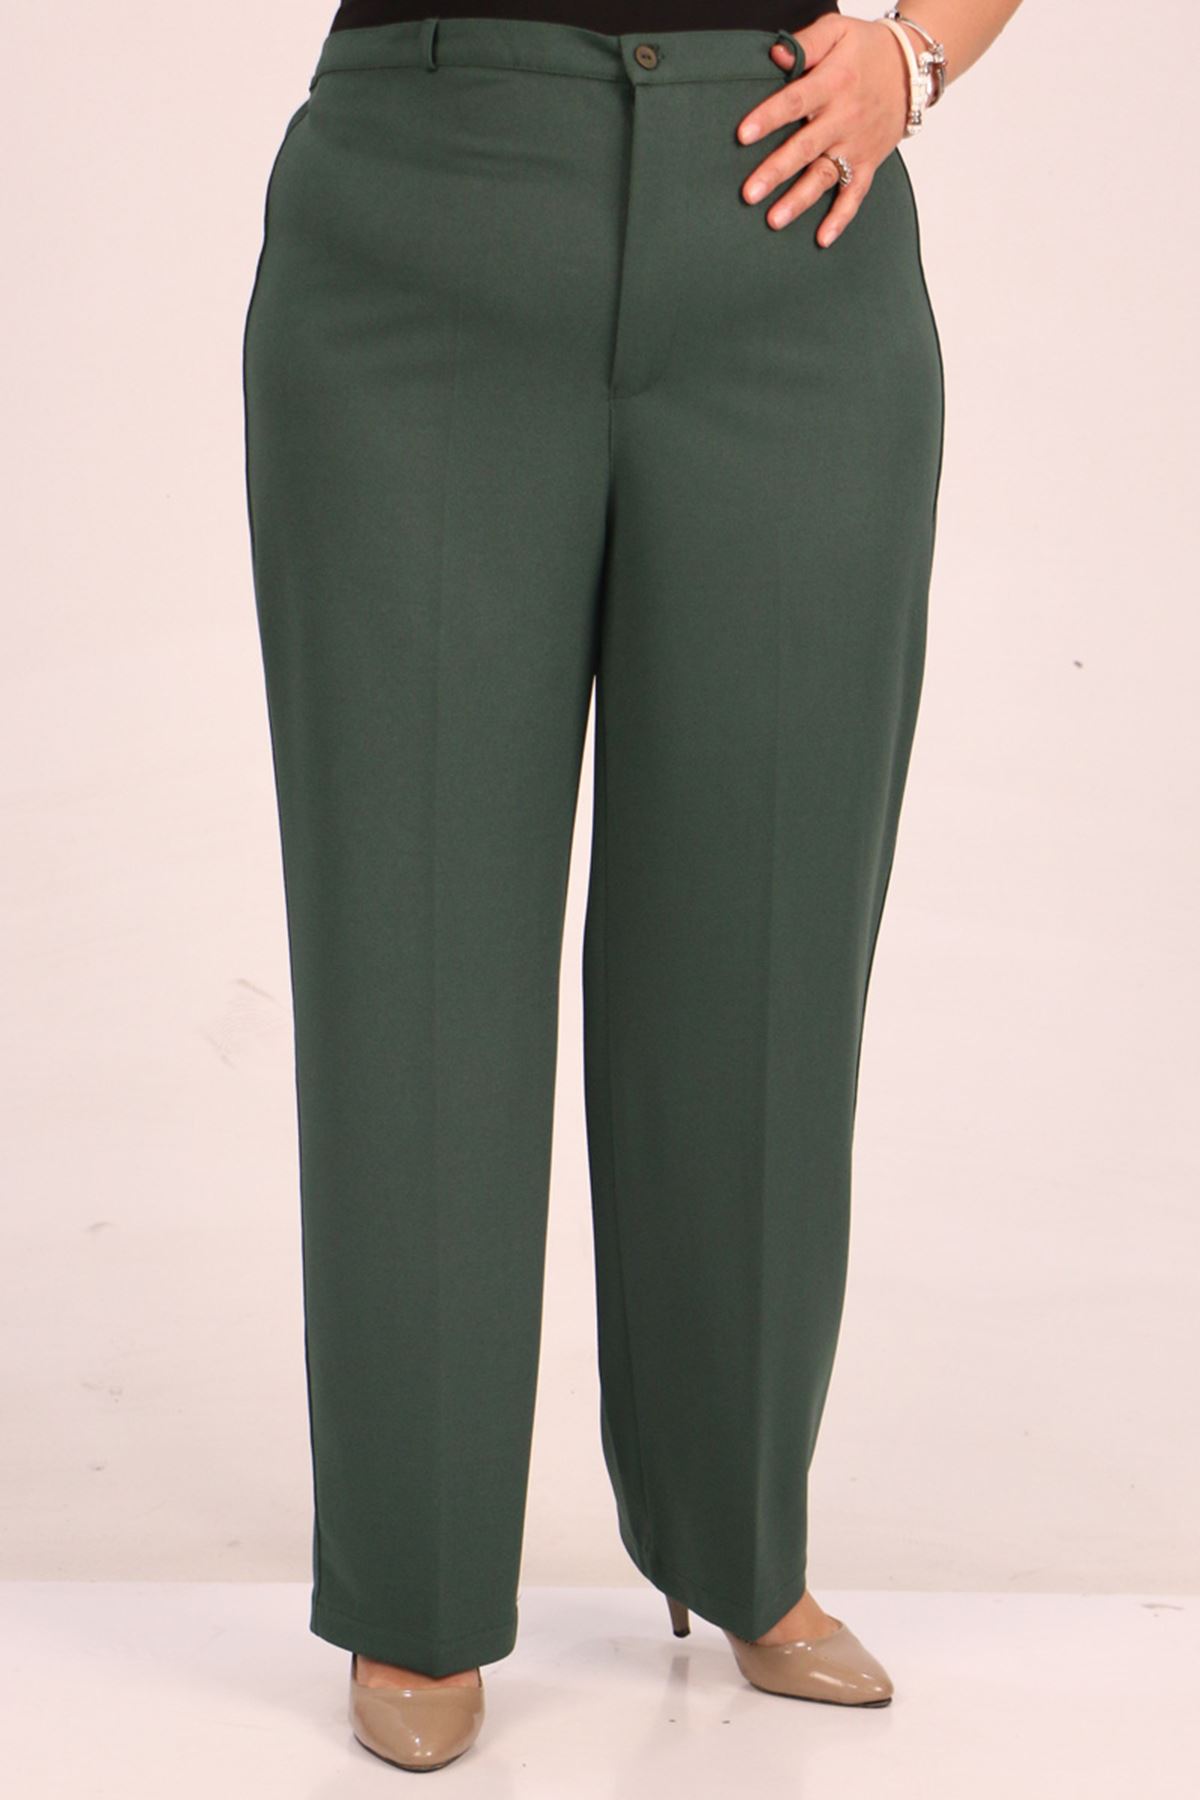 39044 Large Size Elastic Waist Scuba Trousers-Emerald